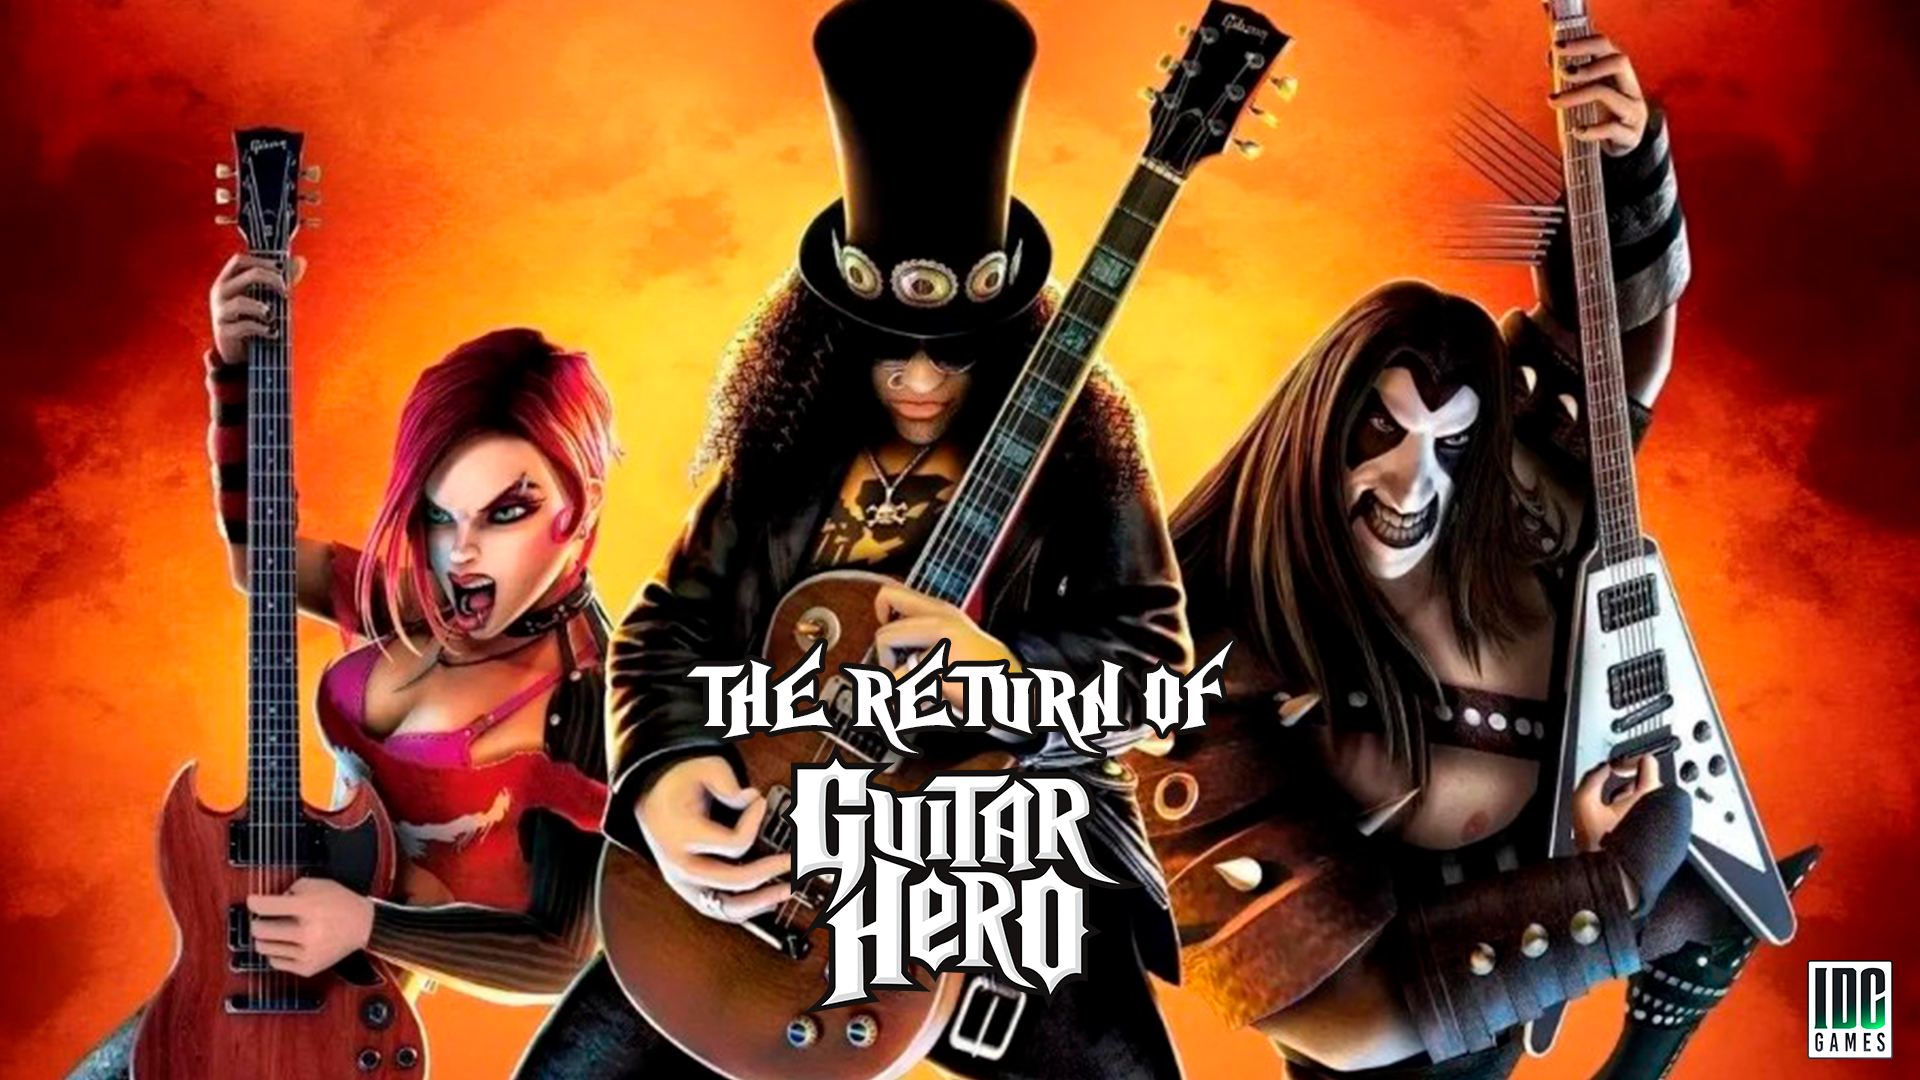 Revenirea lui Guitar Hero